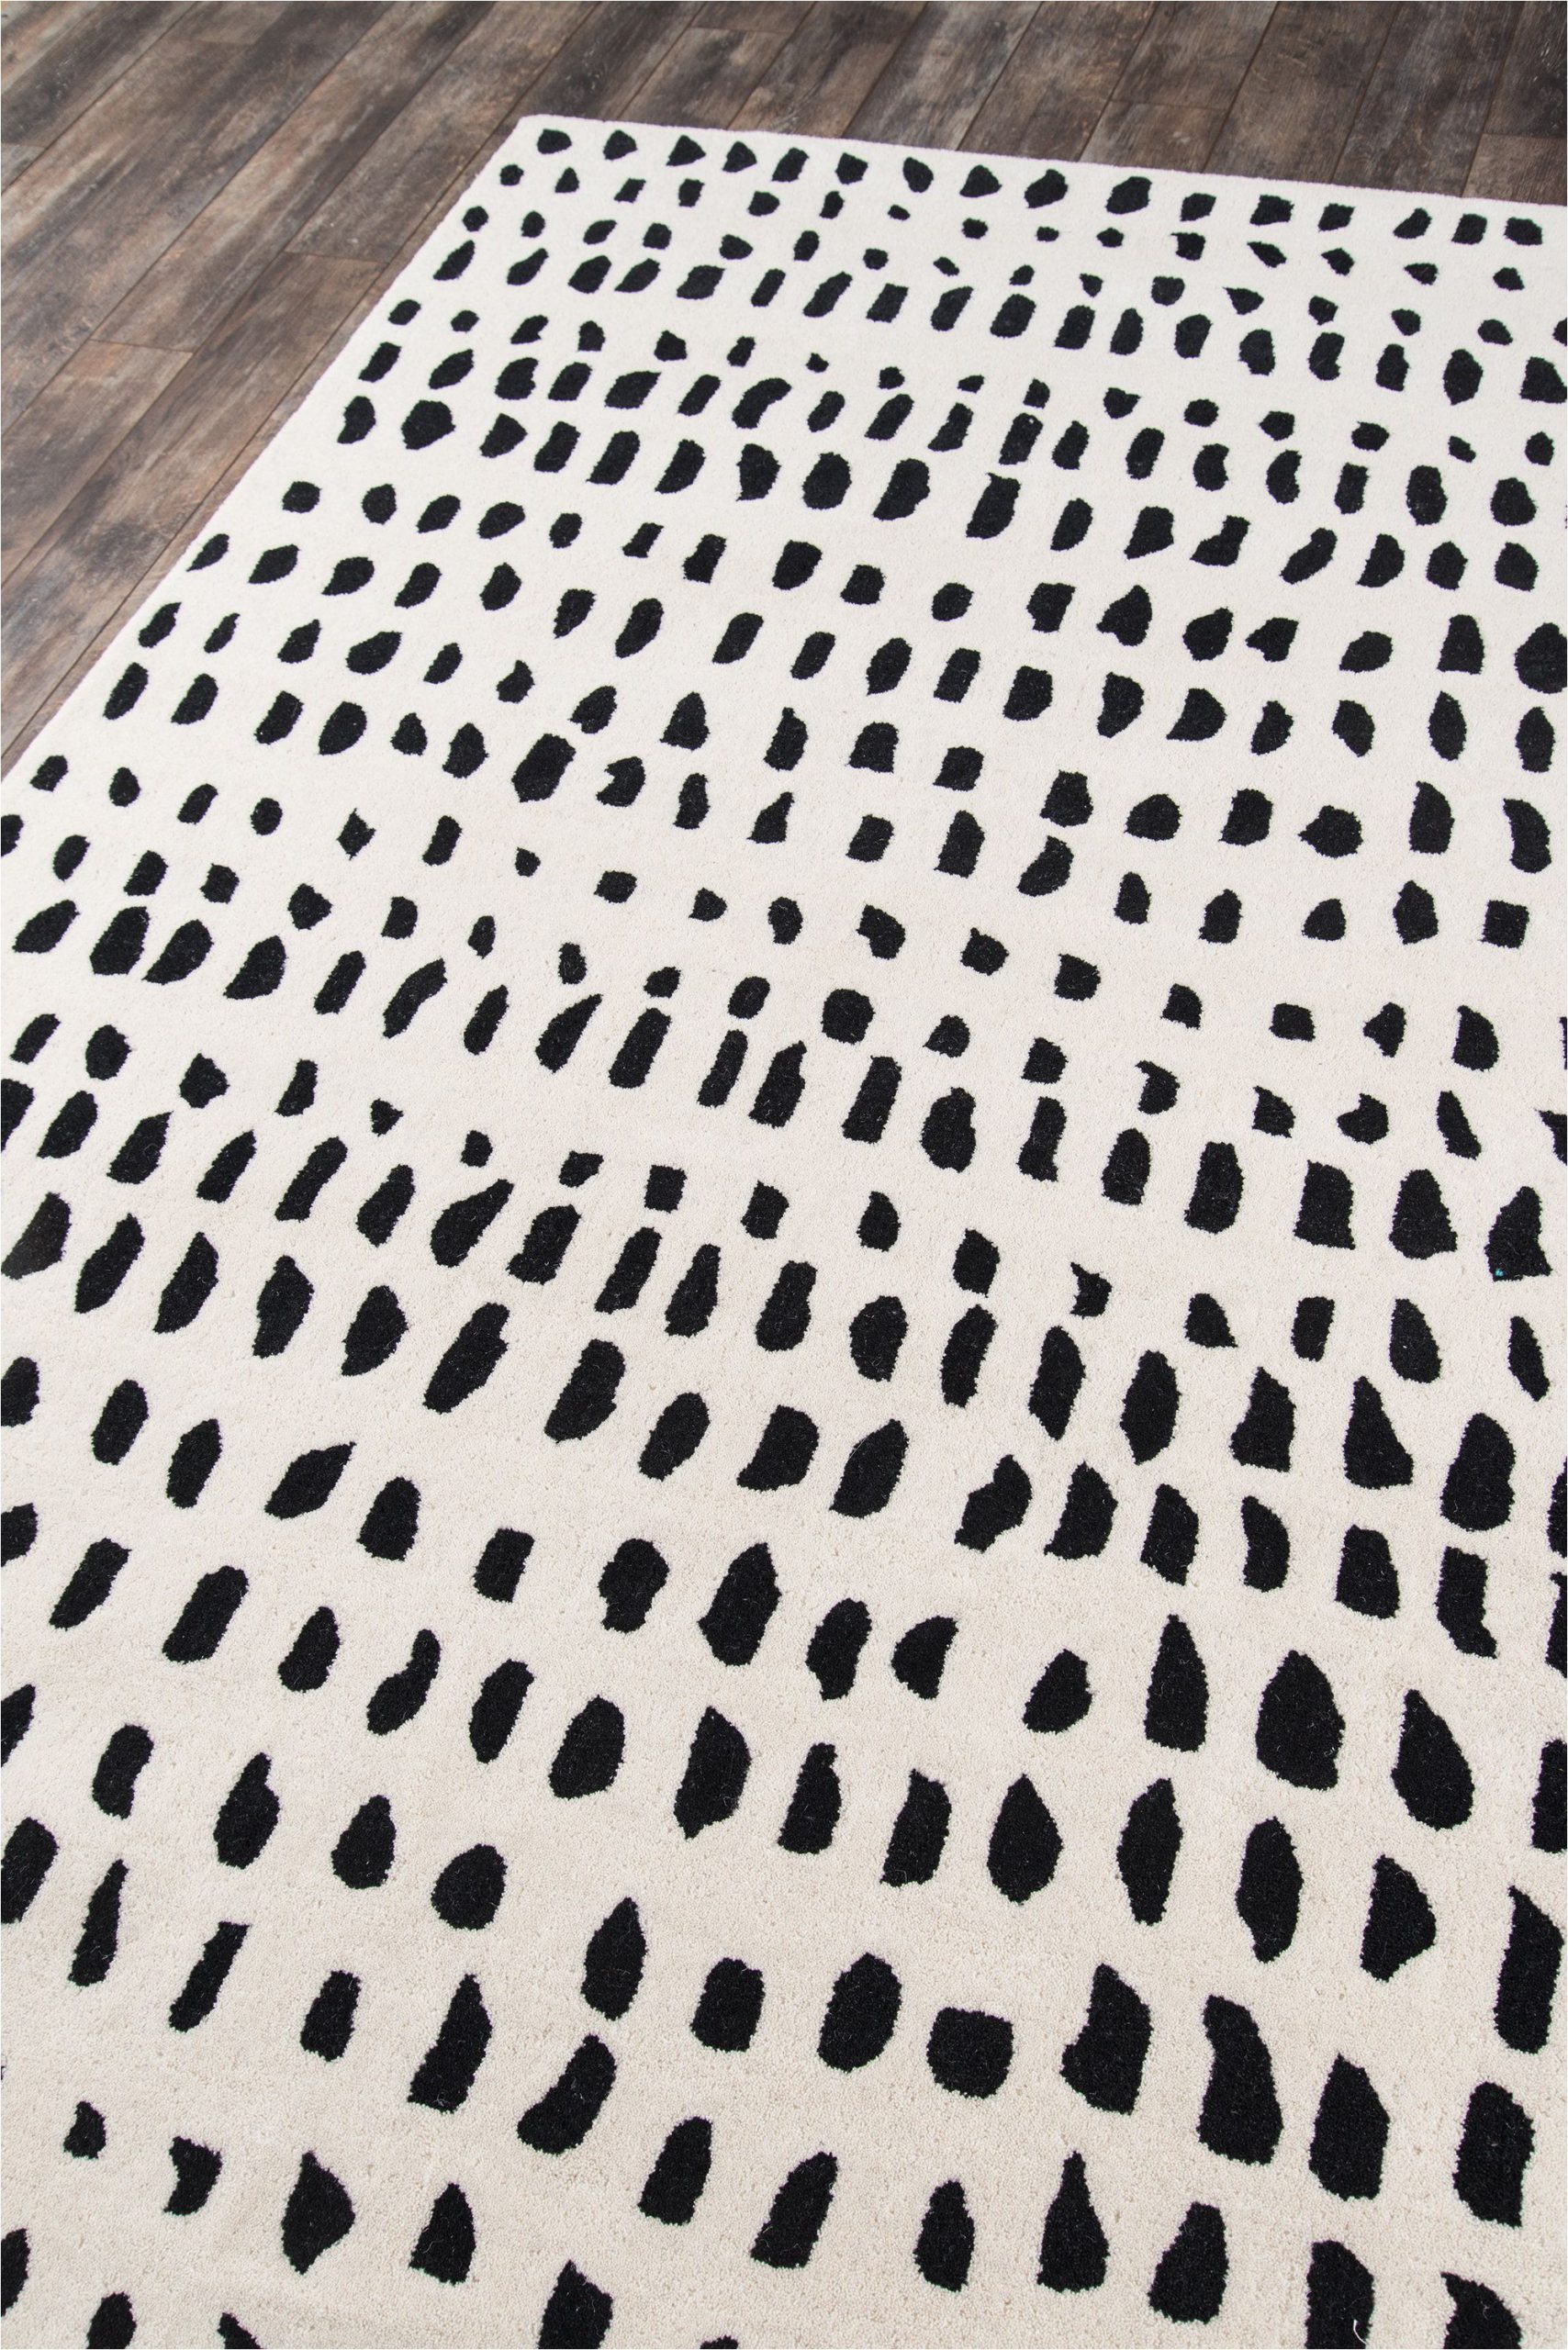 Black and White Polka Dot area Rug Novogratz Polka Dots Handmade Tufted Wool Ivory Black area